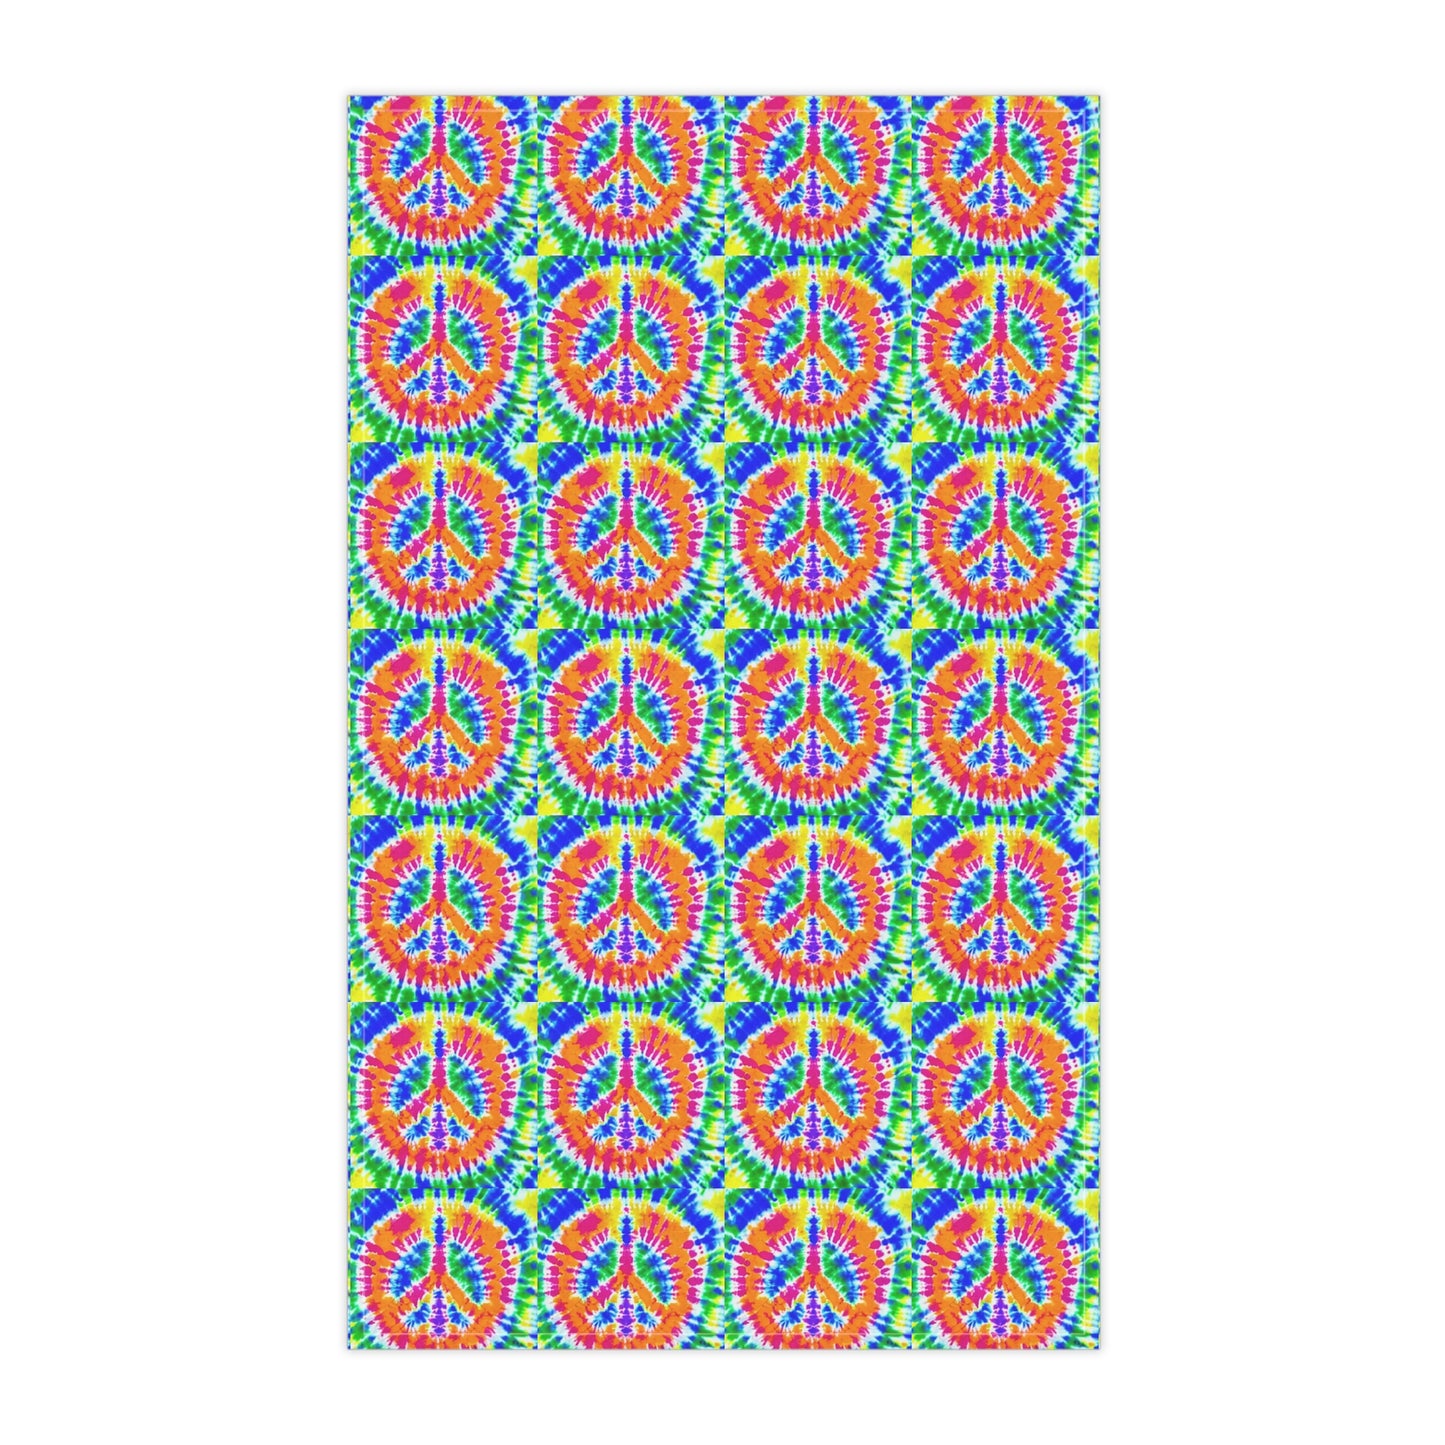 Tie-Dye Peace Symbol Vintage 1960s Multi Colored New Hippie Style Decorative Kitchen Tea Towel/Bar Towel